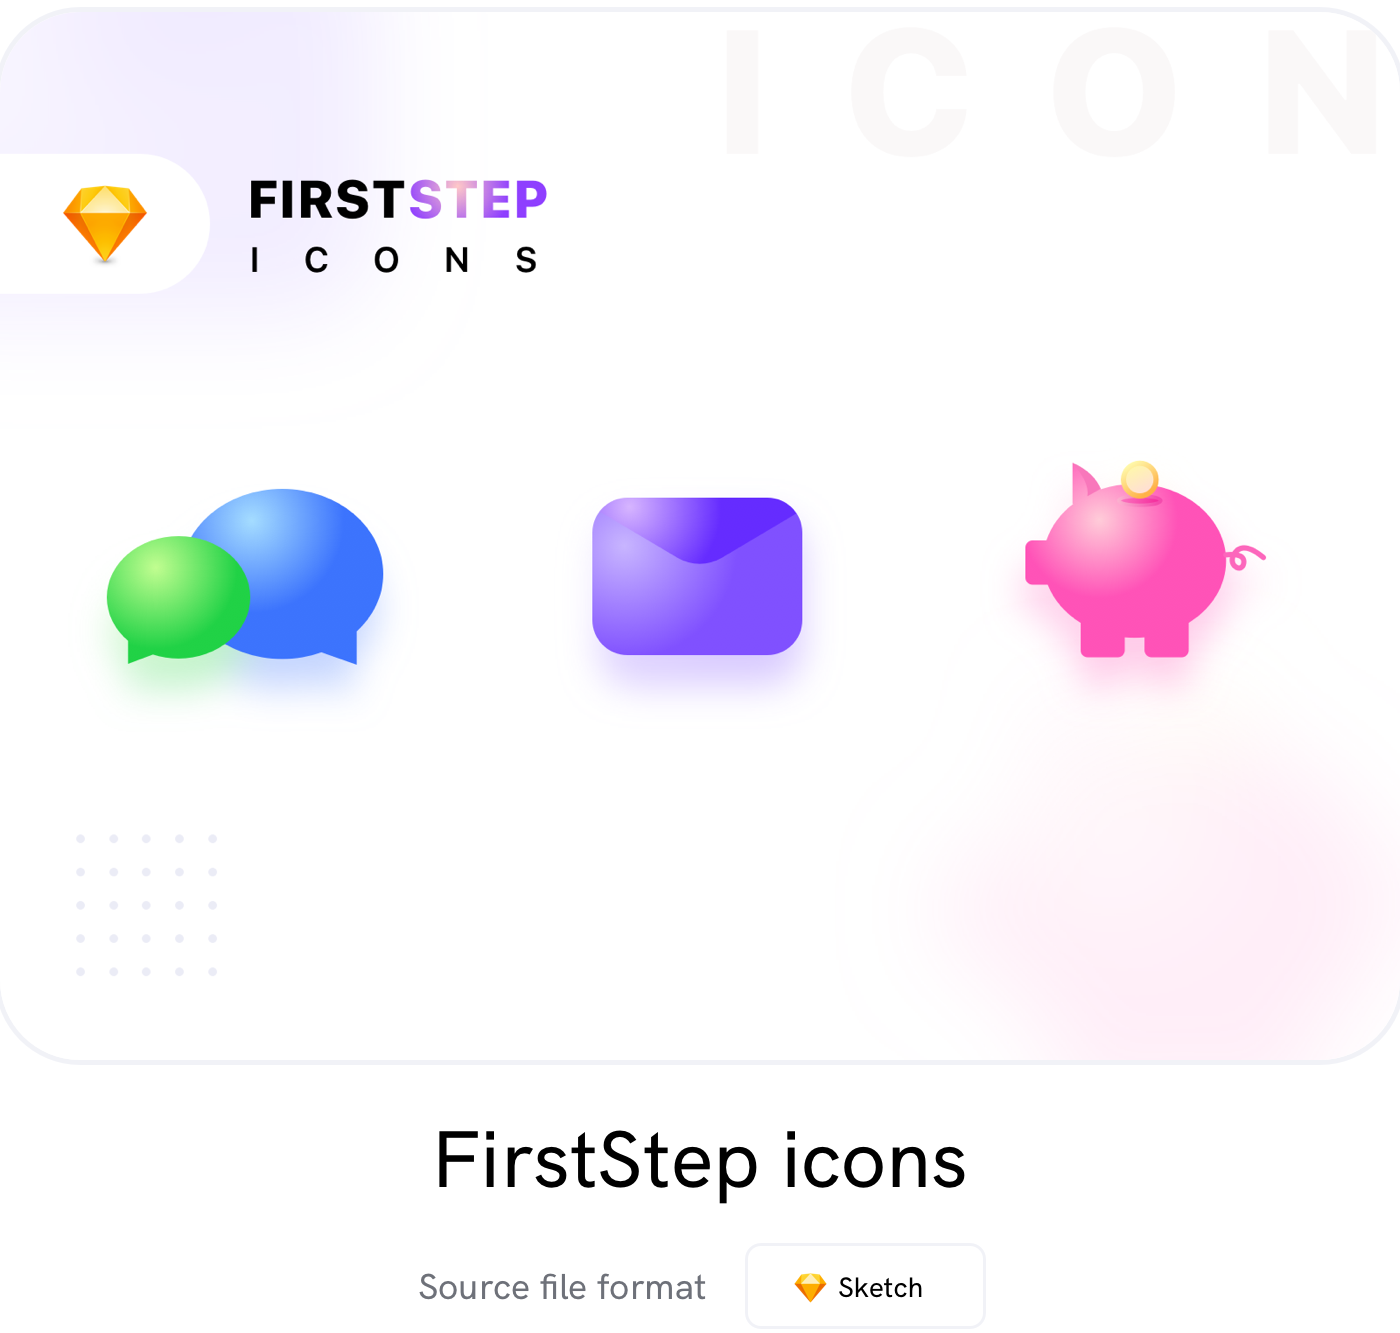 2019 app icons Icon logo prakhar neel sharma Mobile app application UI UX design visual designer sketch photoshop freebies Free